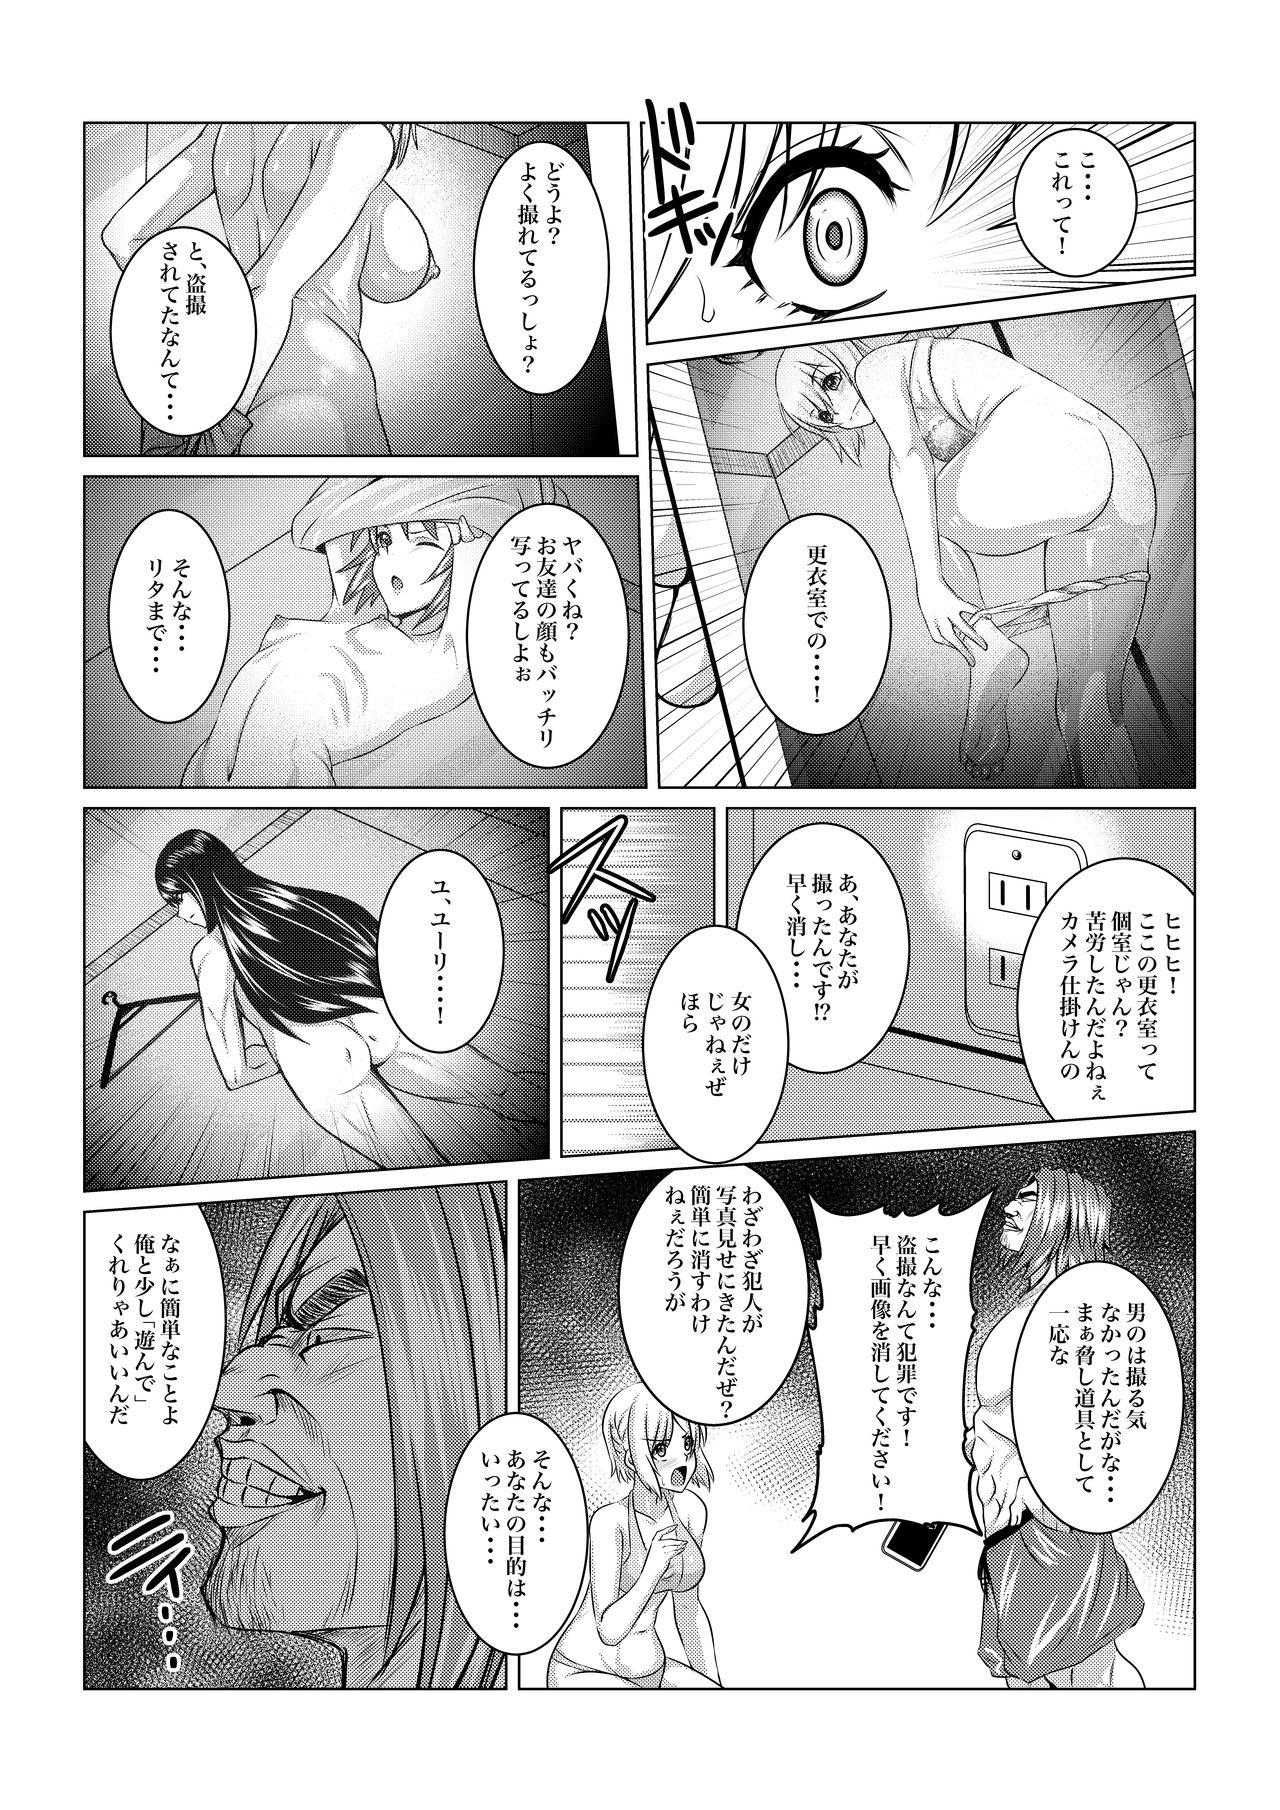 Best Blowjob Gekka Midarezaki - Tales of vesperia Work - Page 7